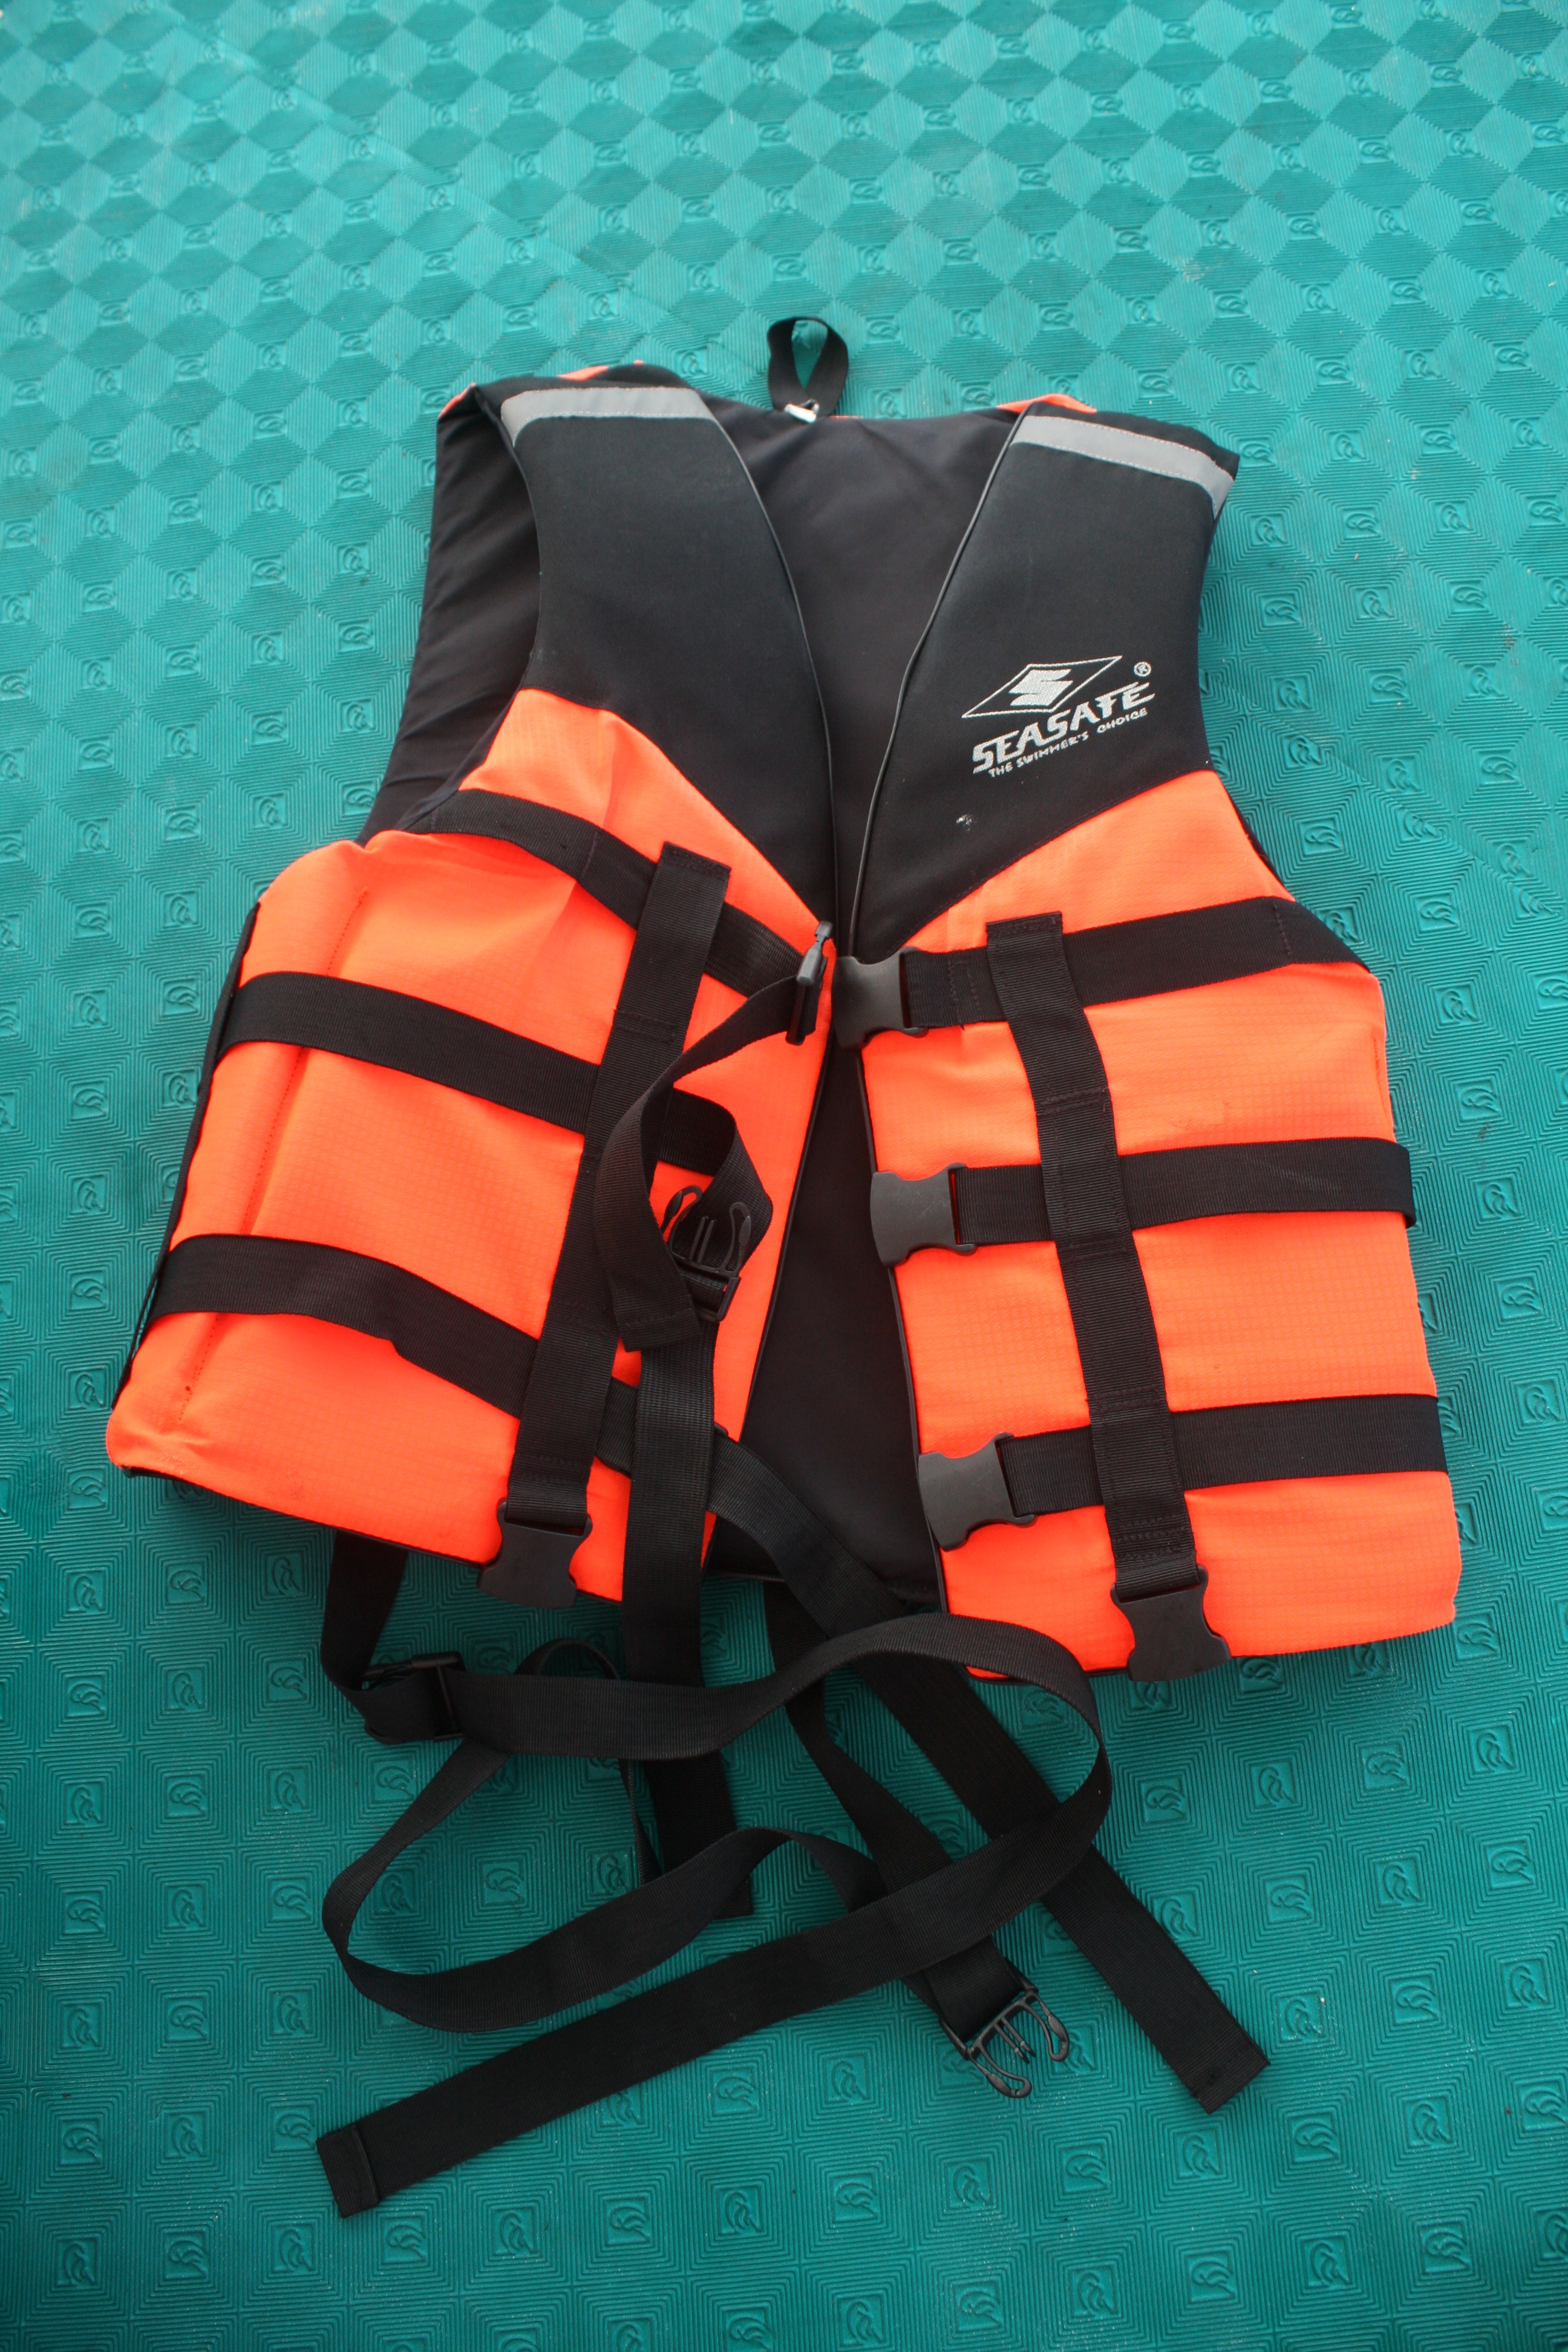 Orange and Black life vest.